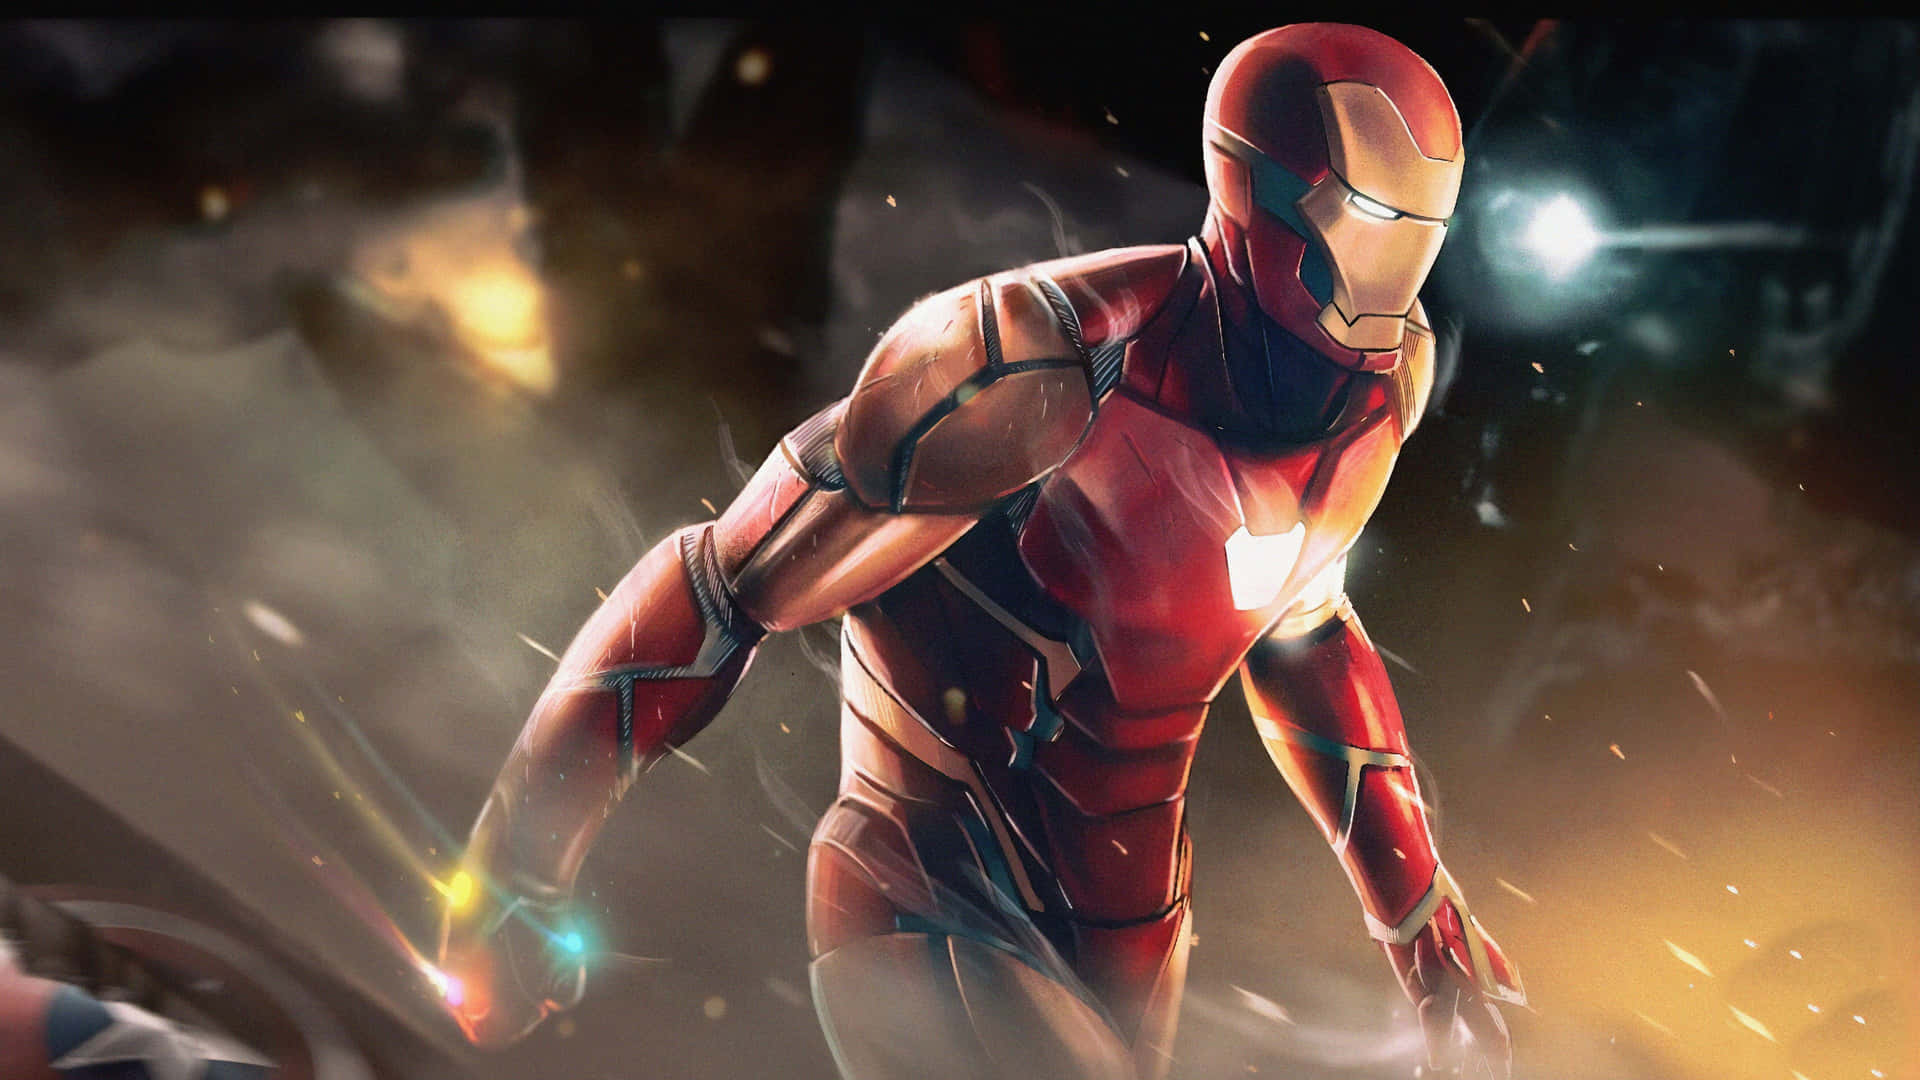 “Iron Man af Avengers” Wallpaper